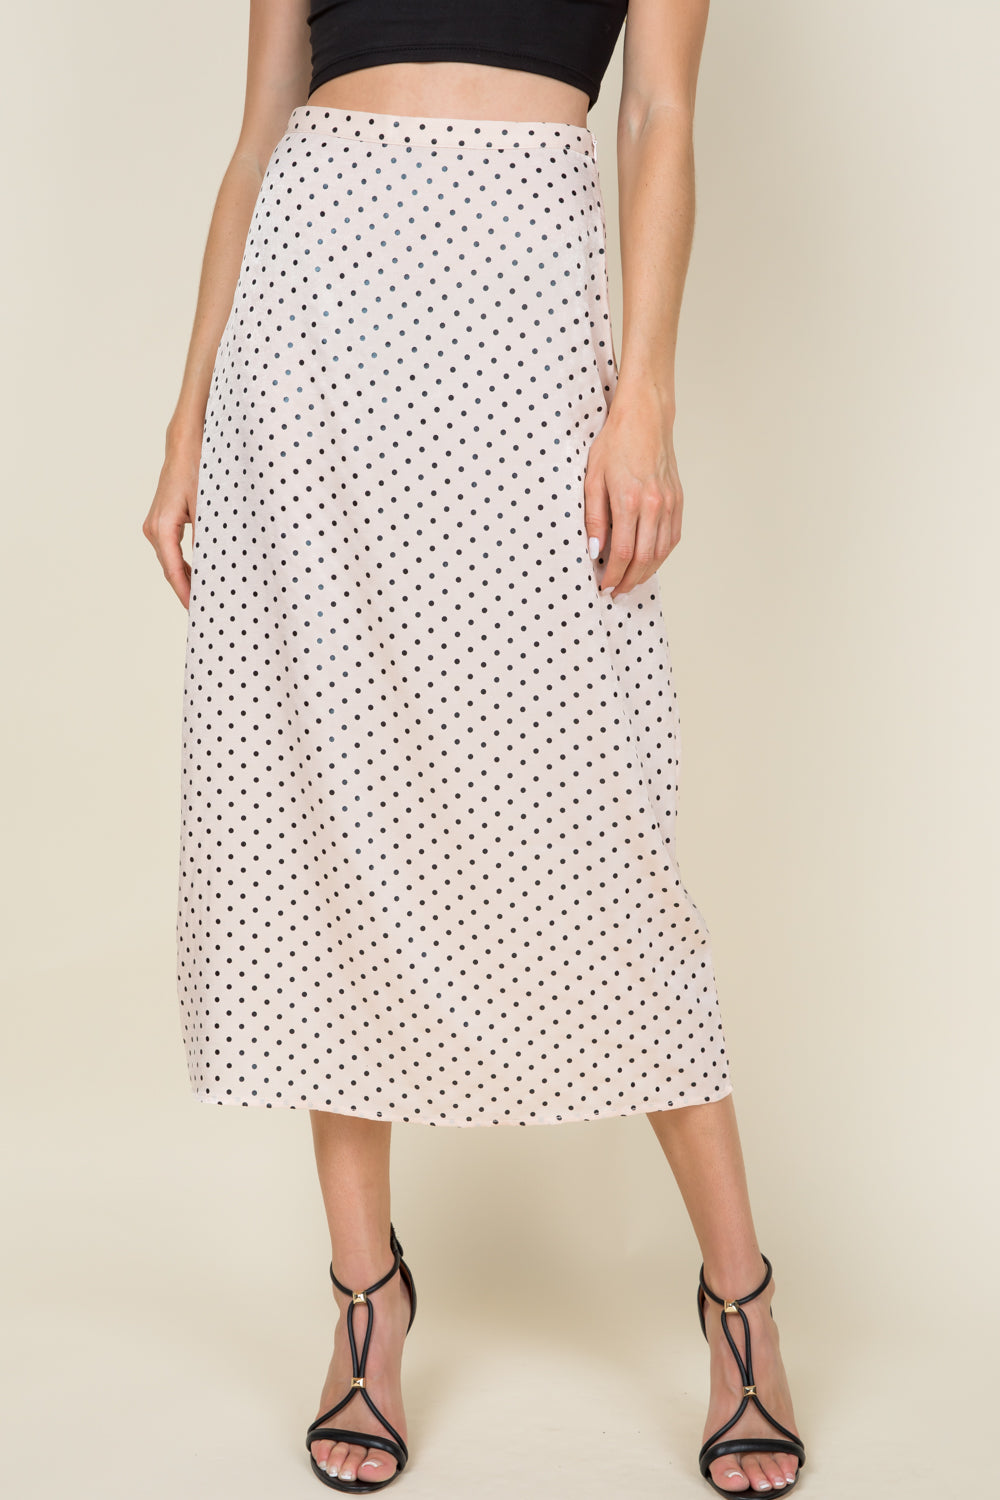 [$4/piece] Polka Dots Skirt